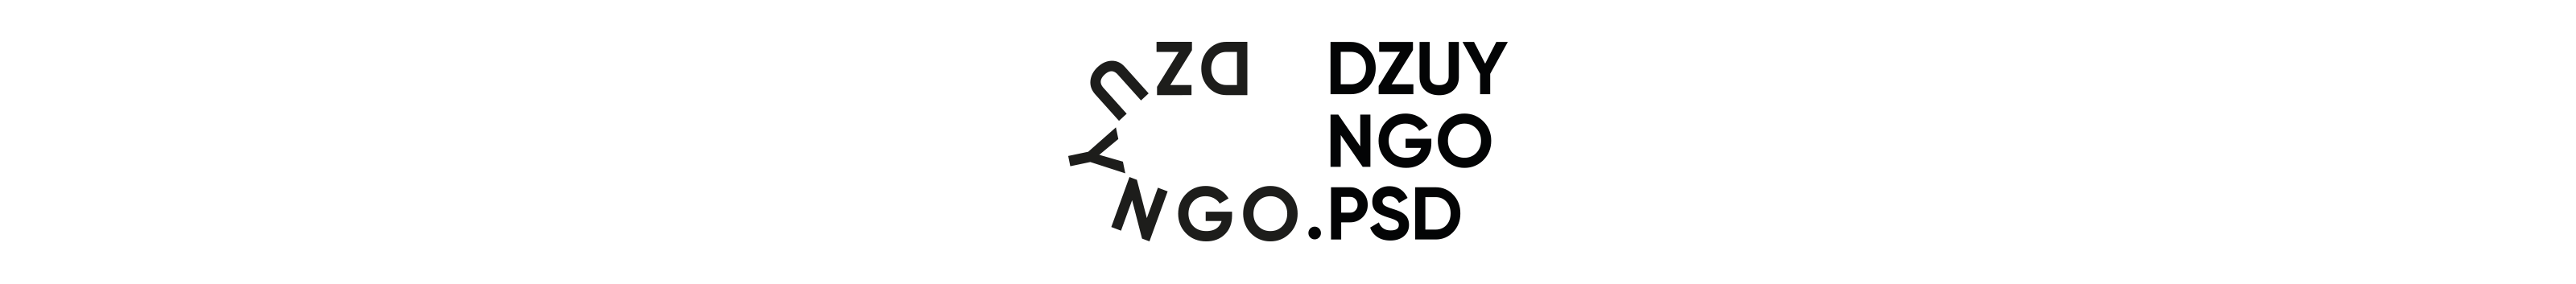 Dzuy Ngo's profile banner